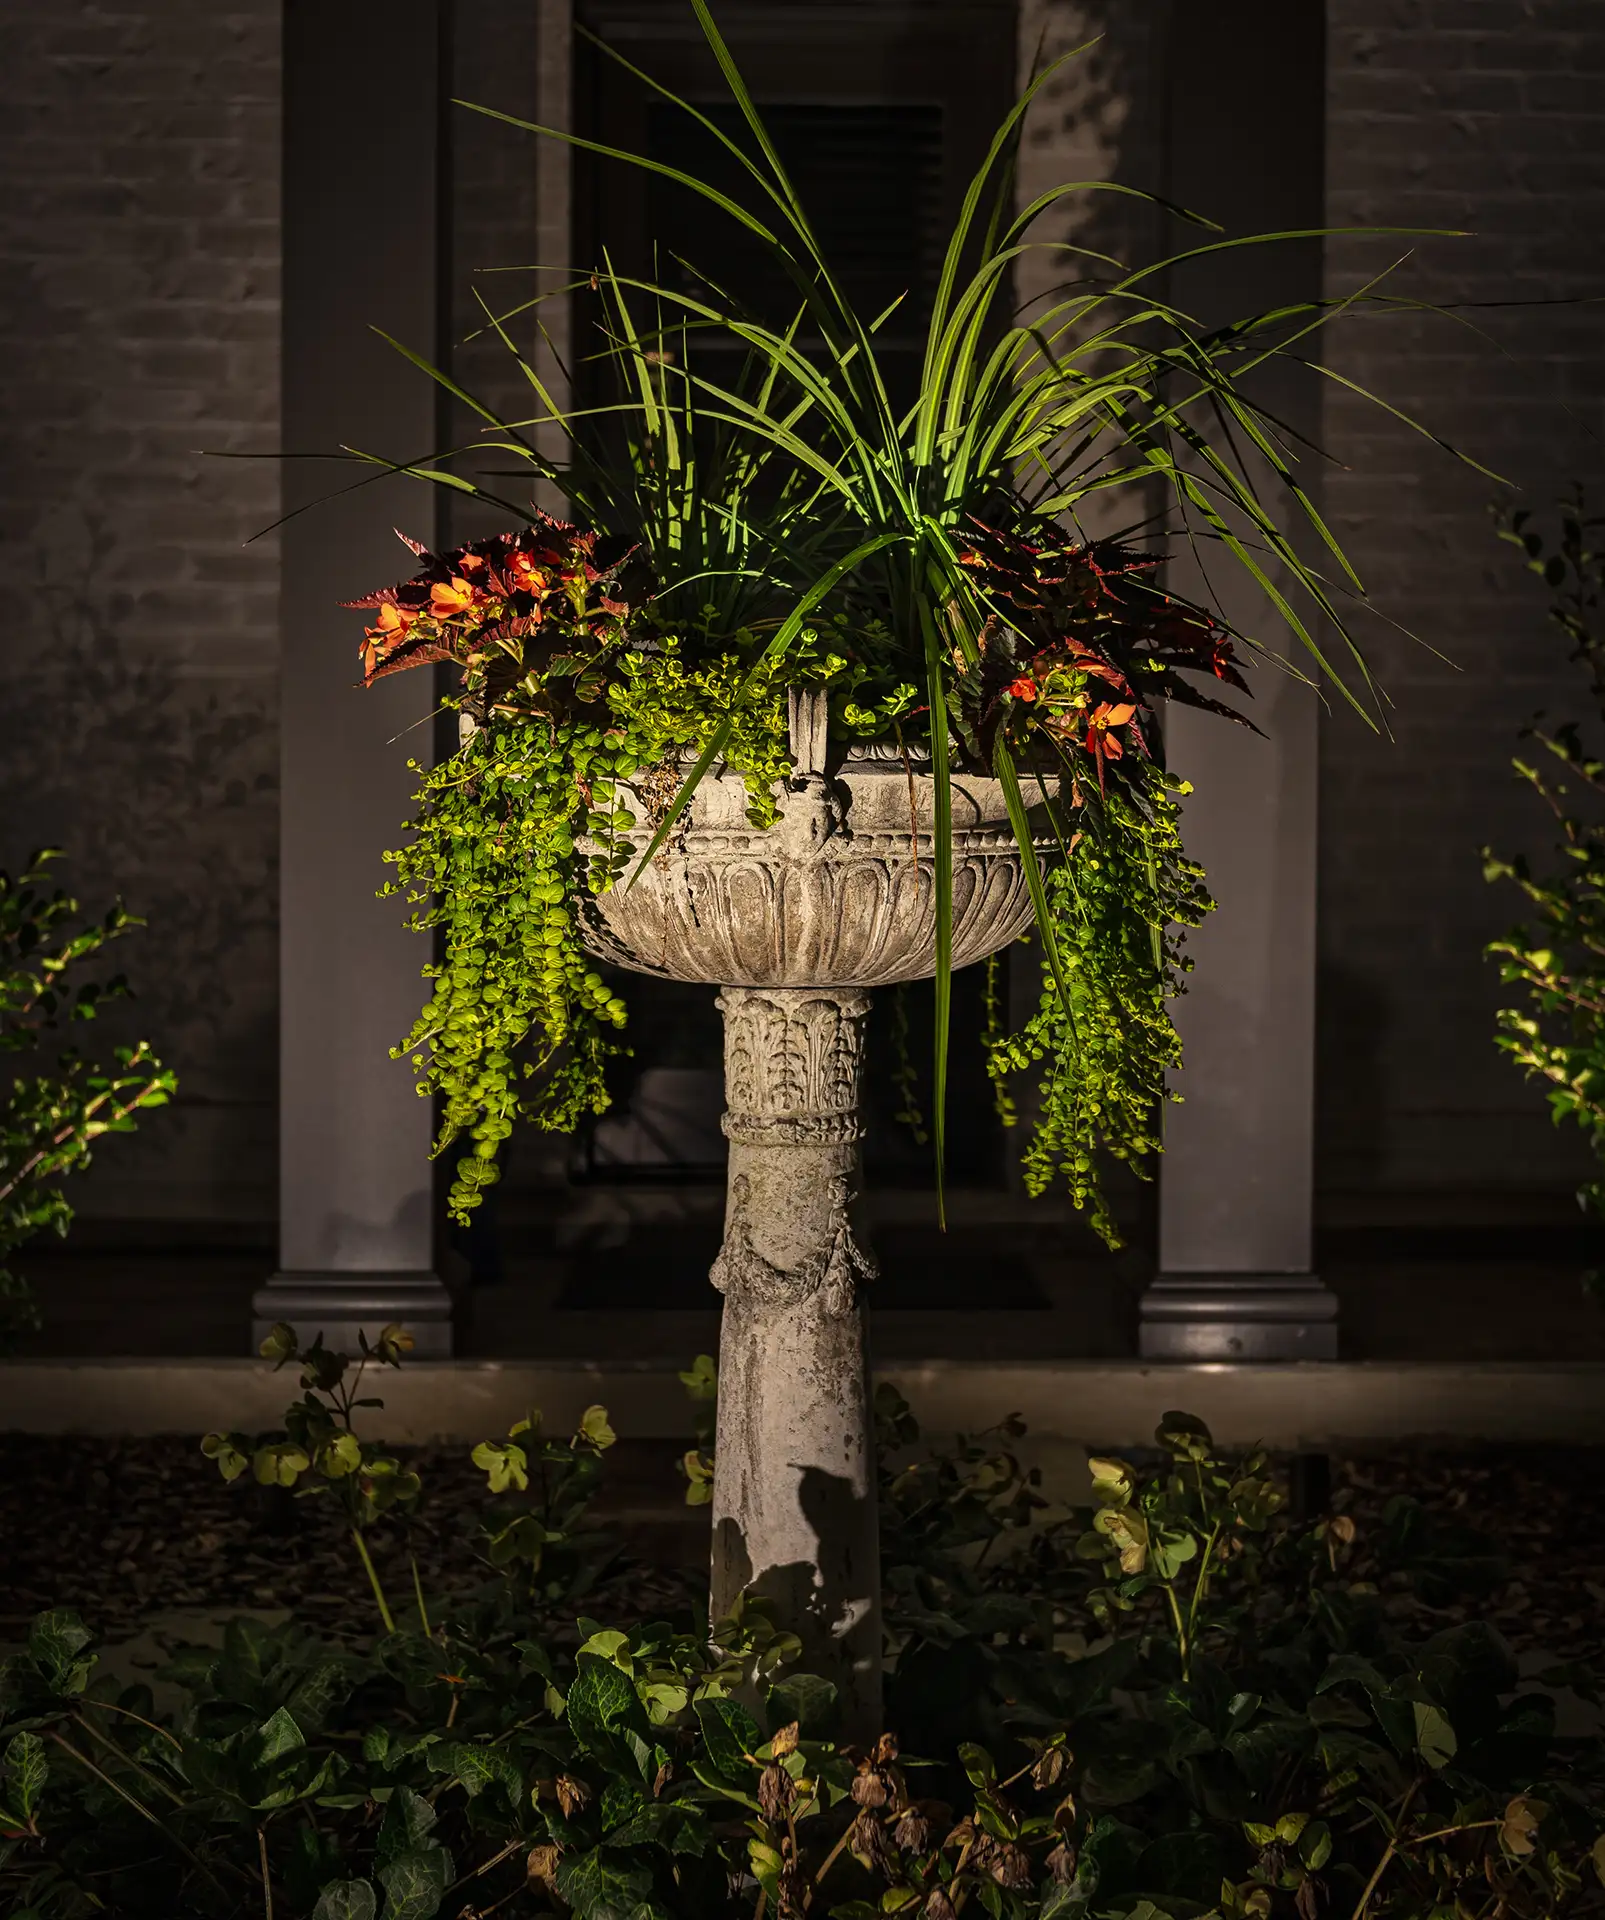 Chattum way image 8 flower pot garden art statuary Lighthouse Outdoor Lighting and Audio Knoxville TN Tennessee